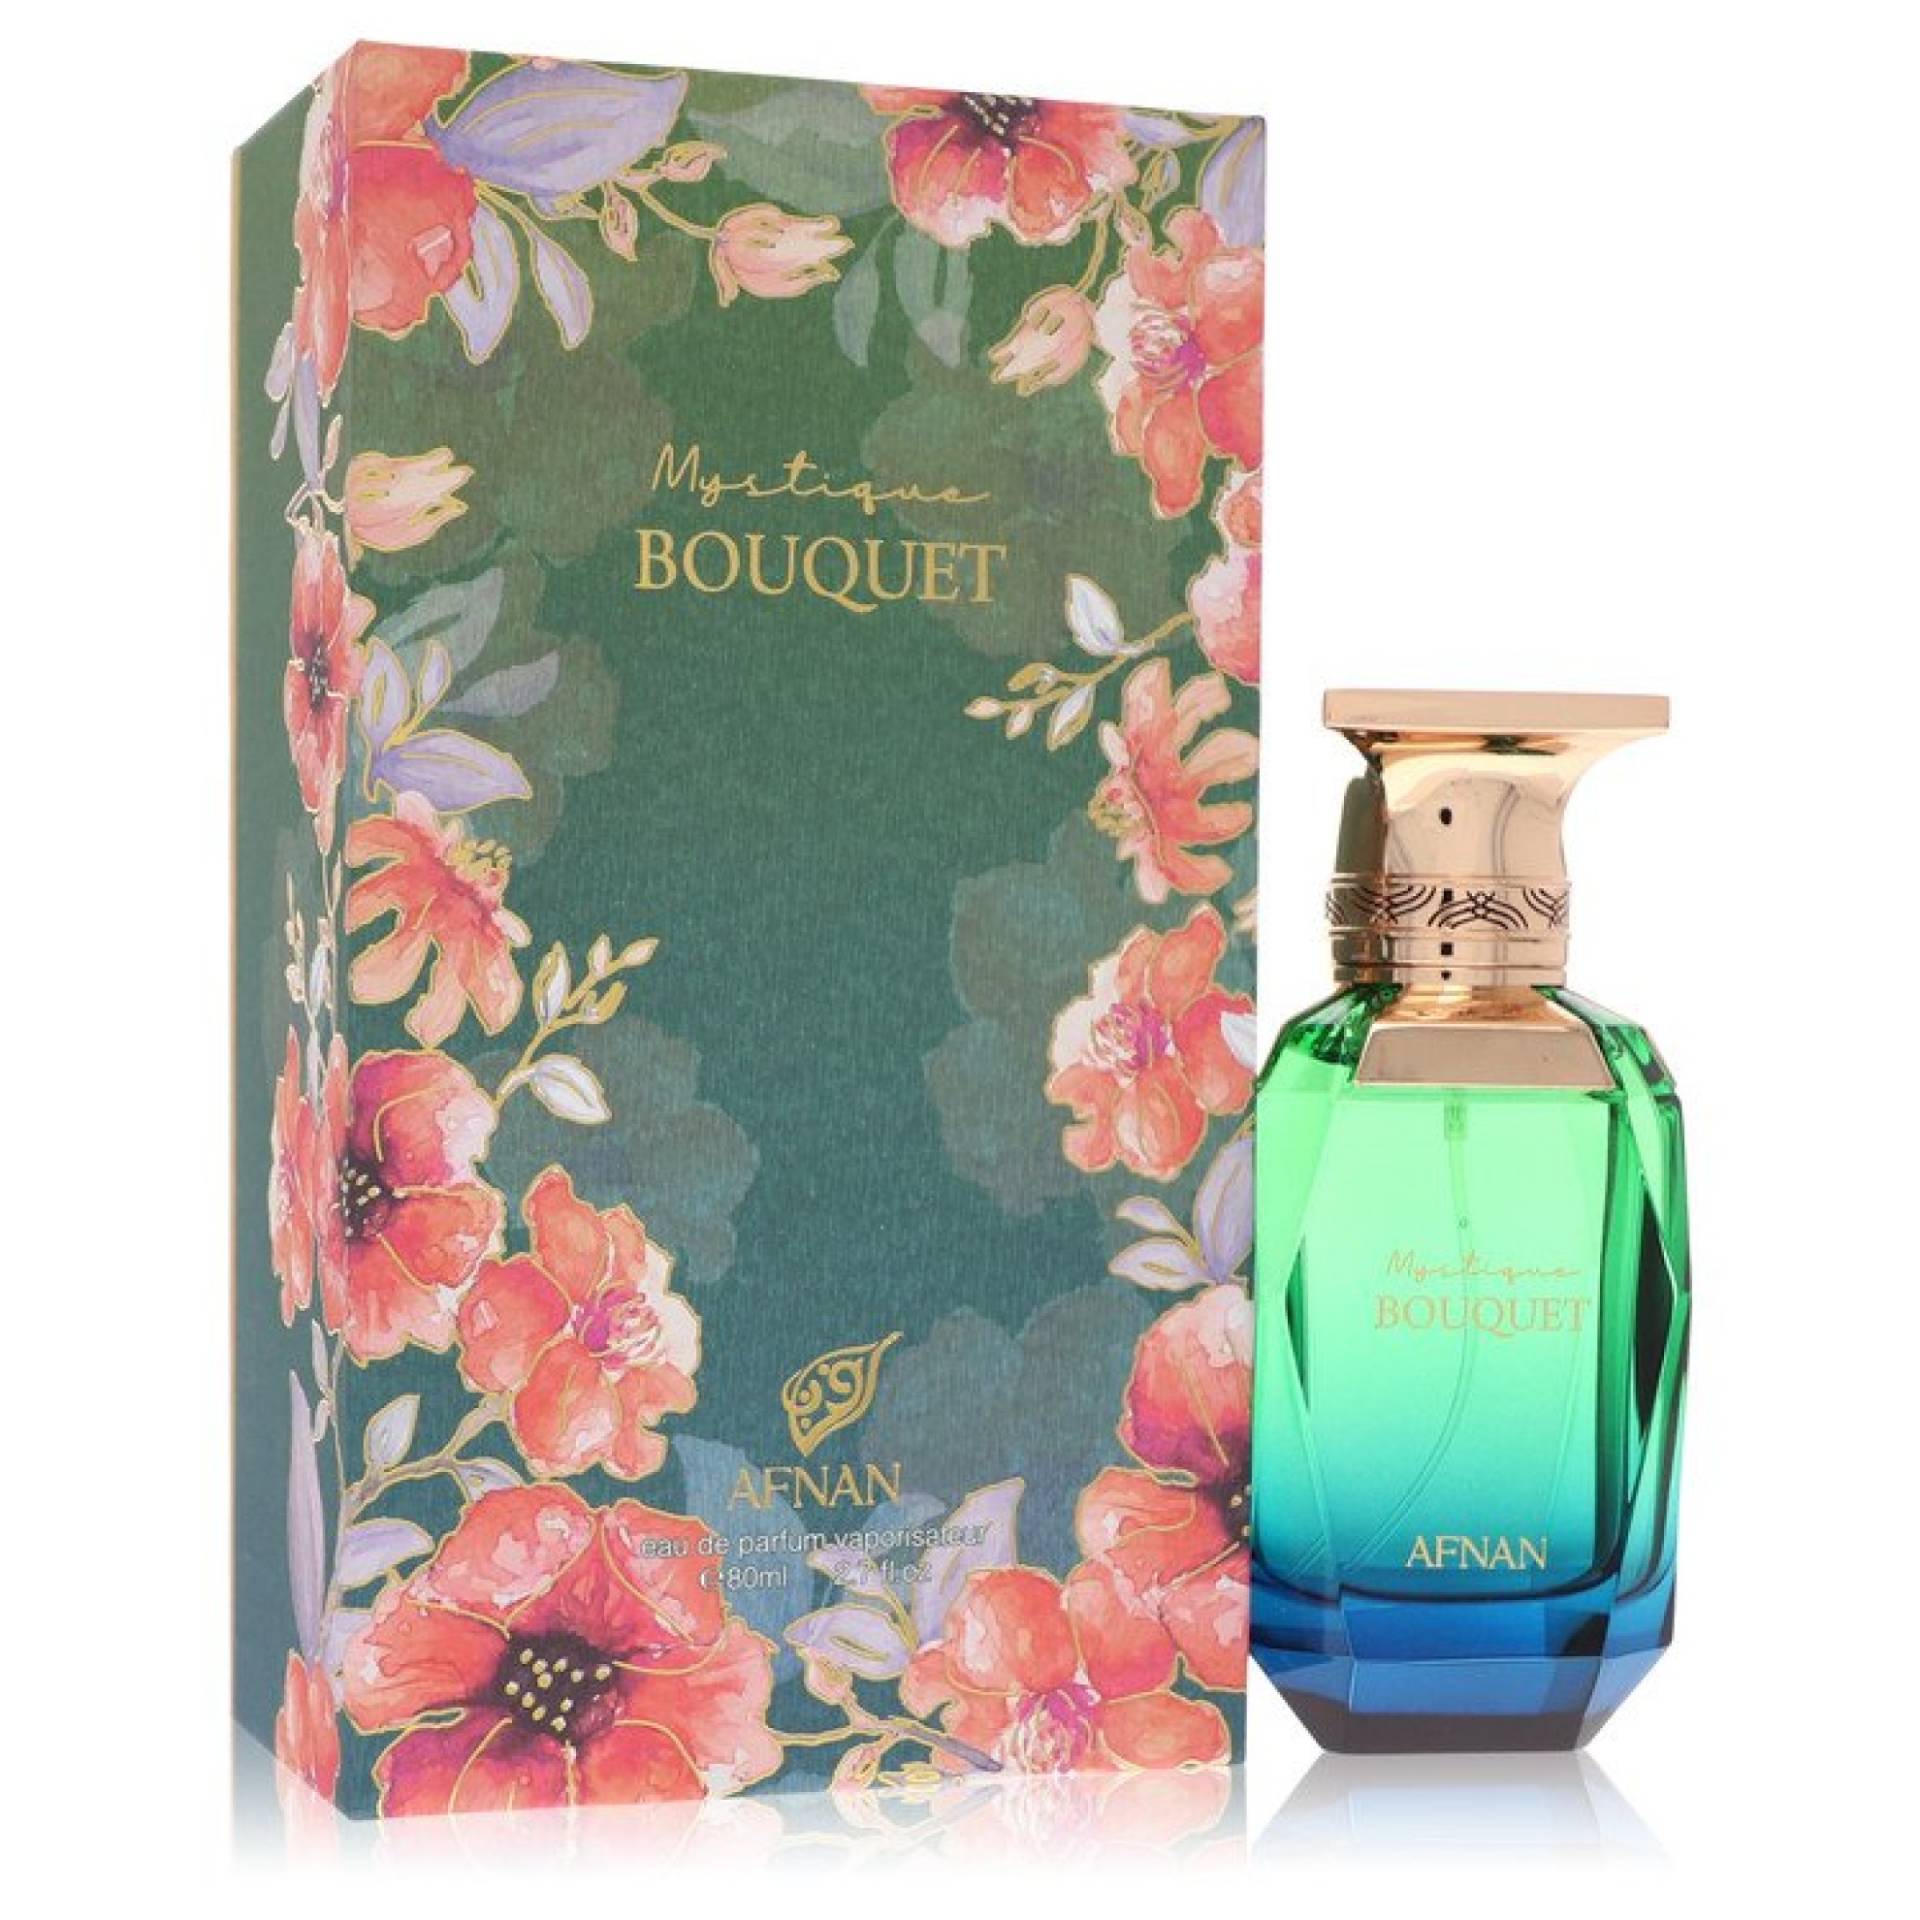 Afnan Mystique Bouquet Eau De Parfum Spray 80 ml von Afnan